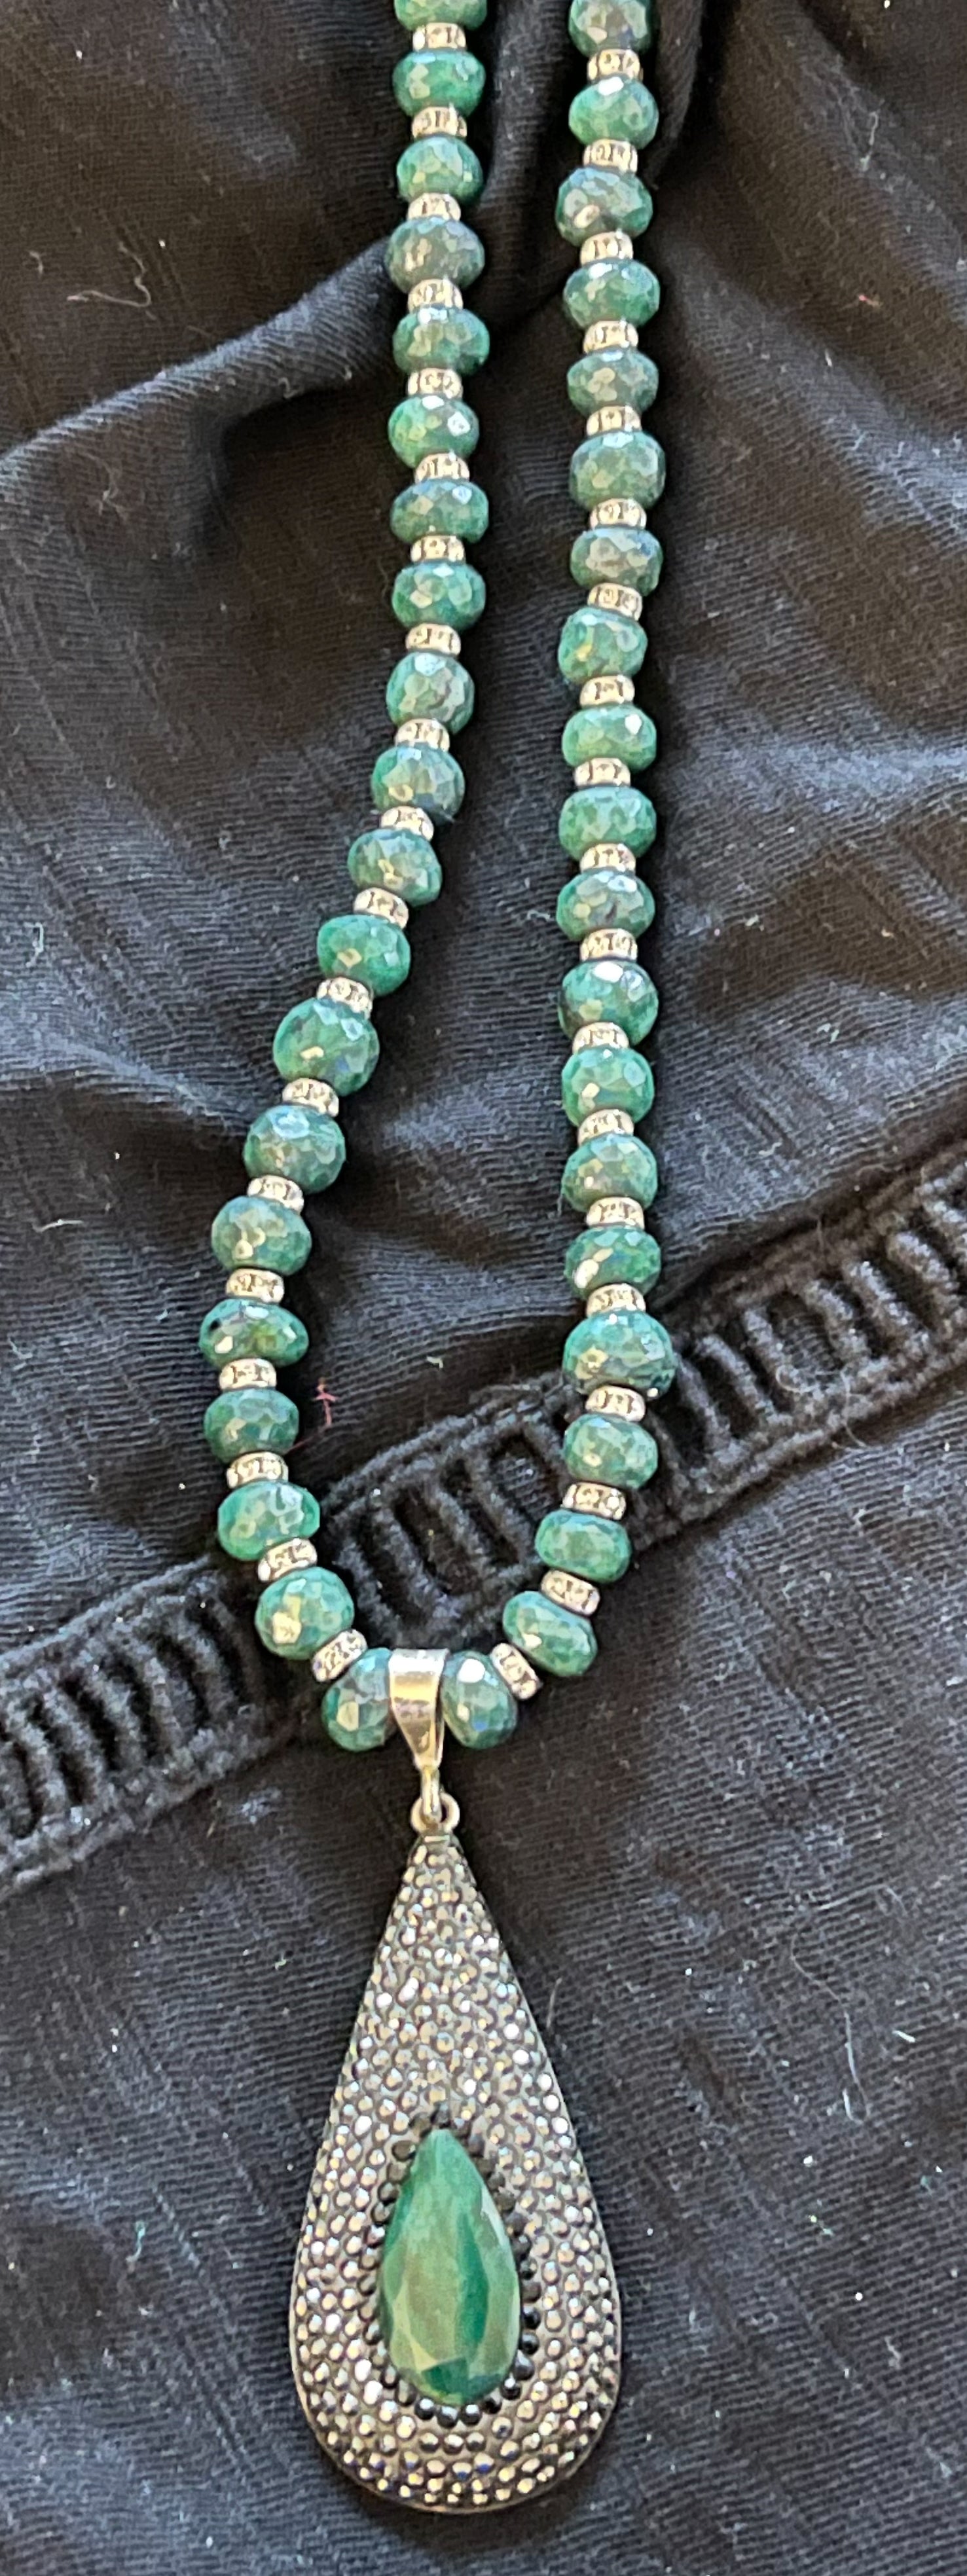 Emerald and Swarovski Crystal Necklace